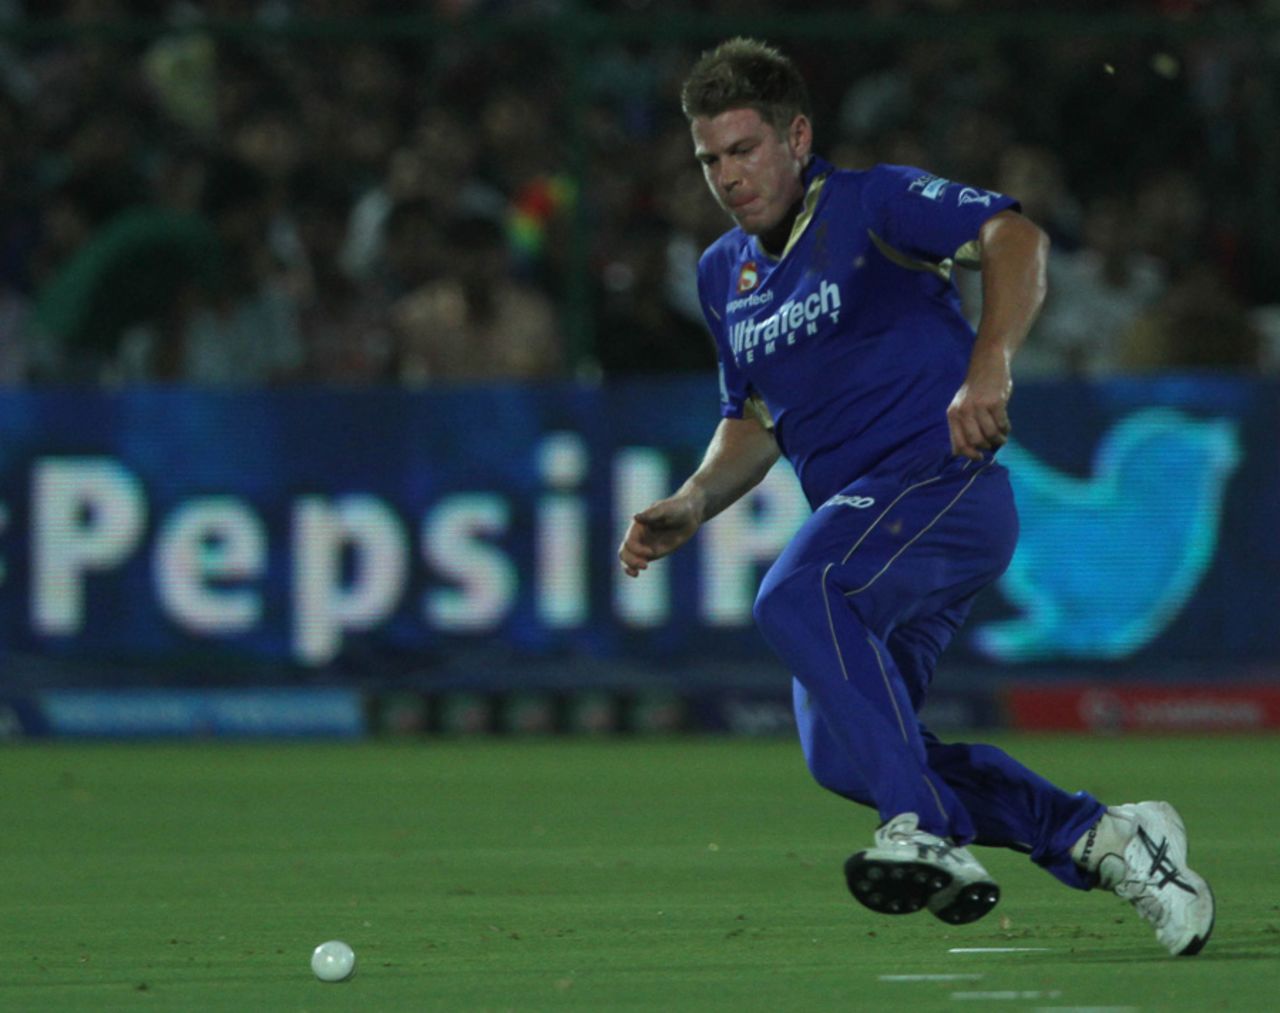 James Faulkner slides to stop the ball, Rajasthan Royals v Kings XI Punjab, IPL, Jaipur, April 14, 2013